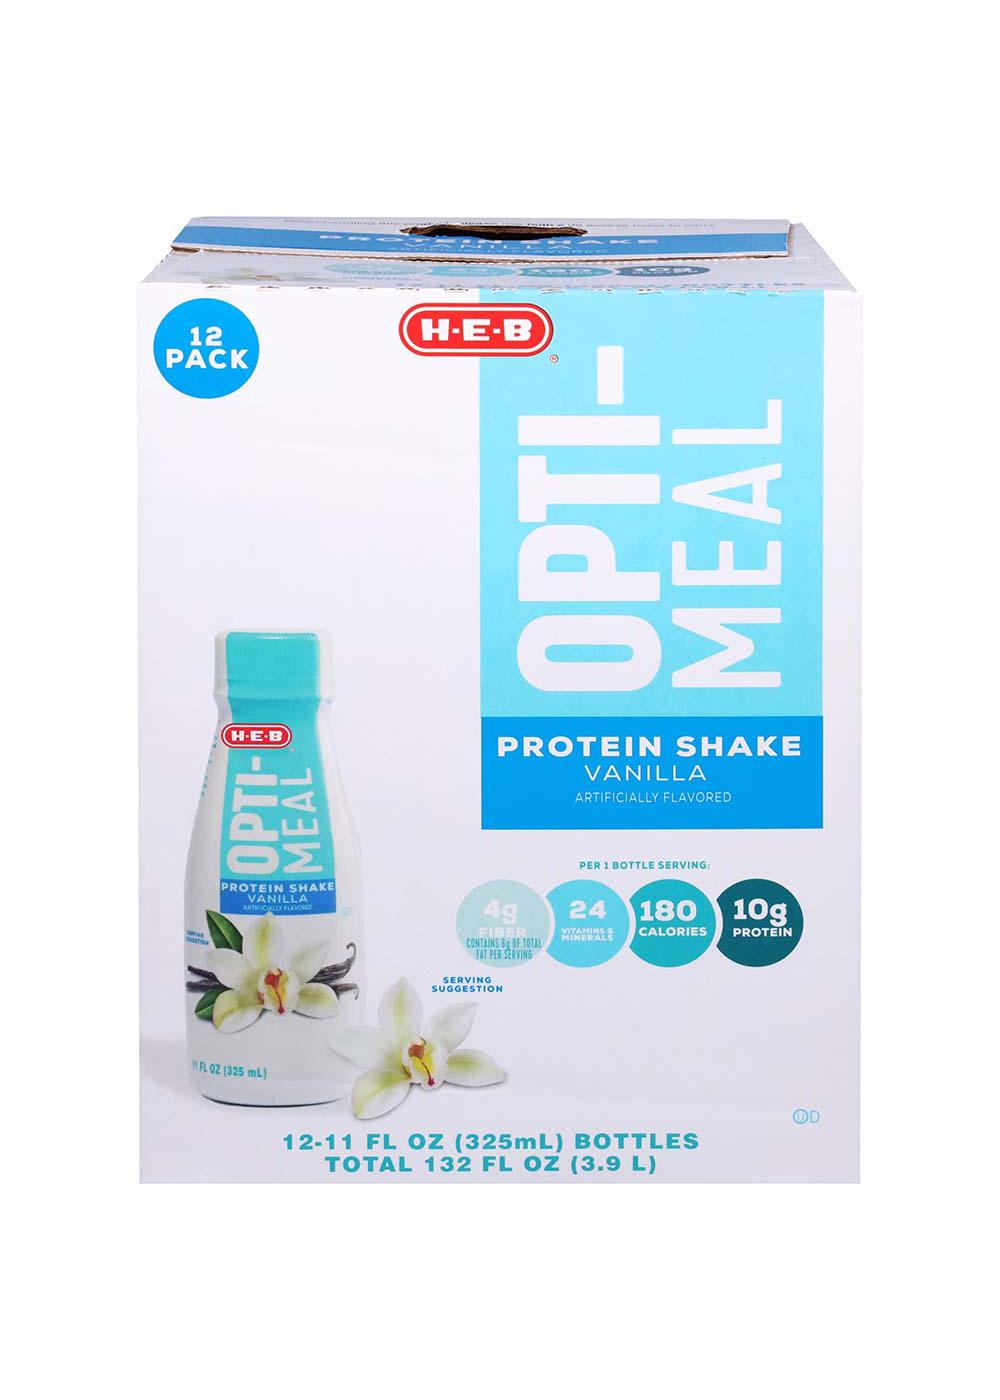 Orgain 30g Milk Protein Shake, Fruity Cereal, 11 fl oz, 18-pack